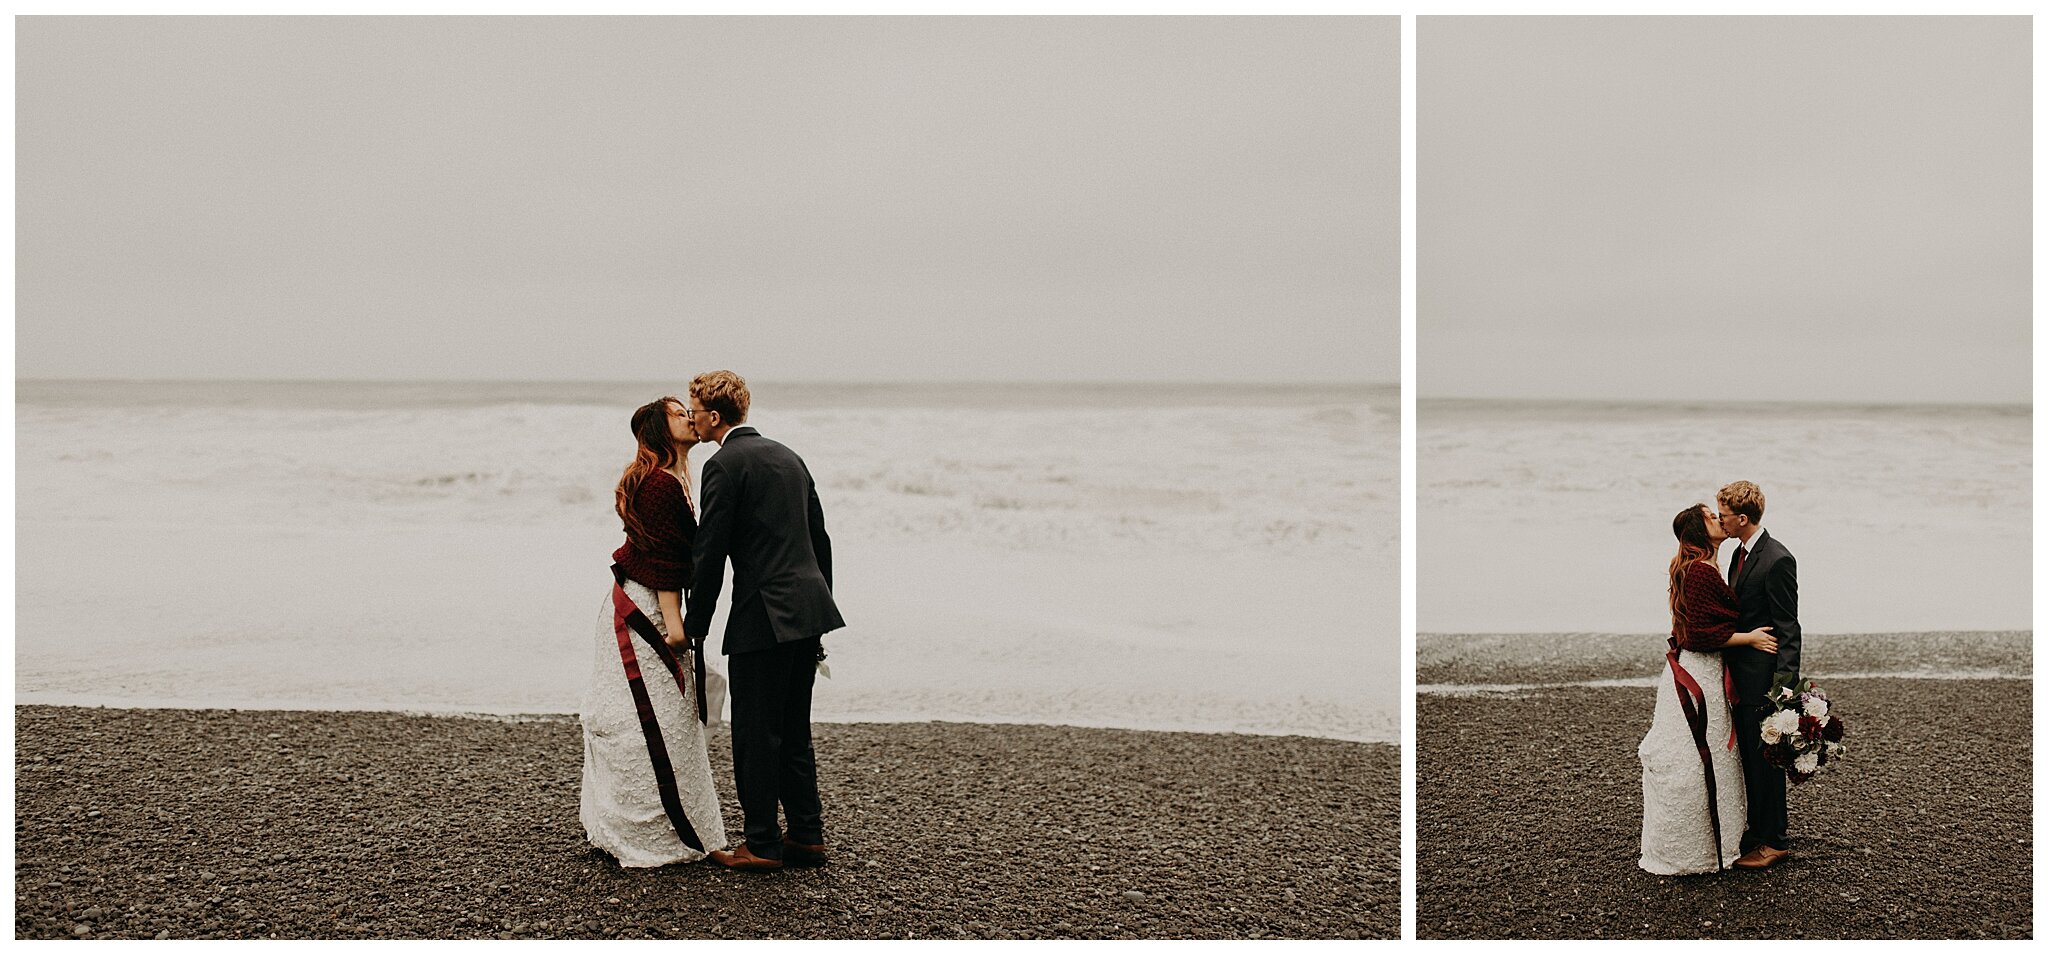 Amanda + David Wedding Portraits - Rialto Beach, Olympic National Park, Washington - Kamra Fuller Photography